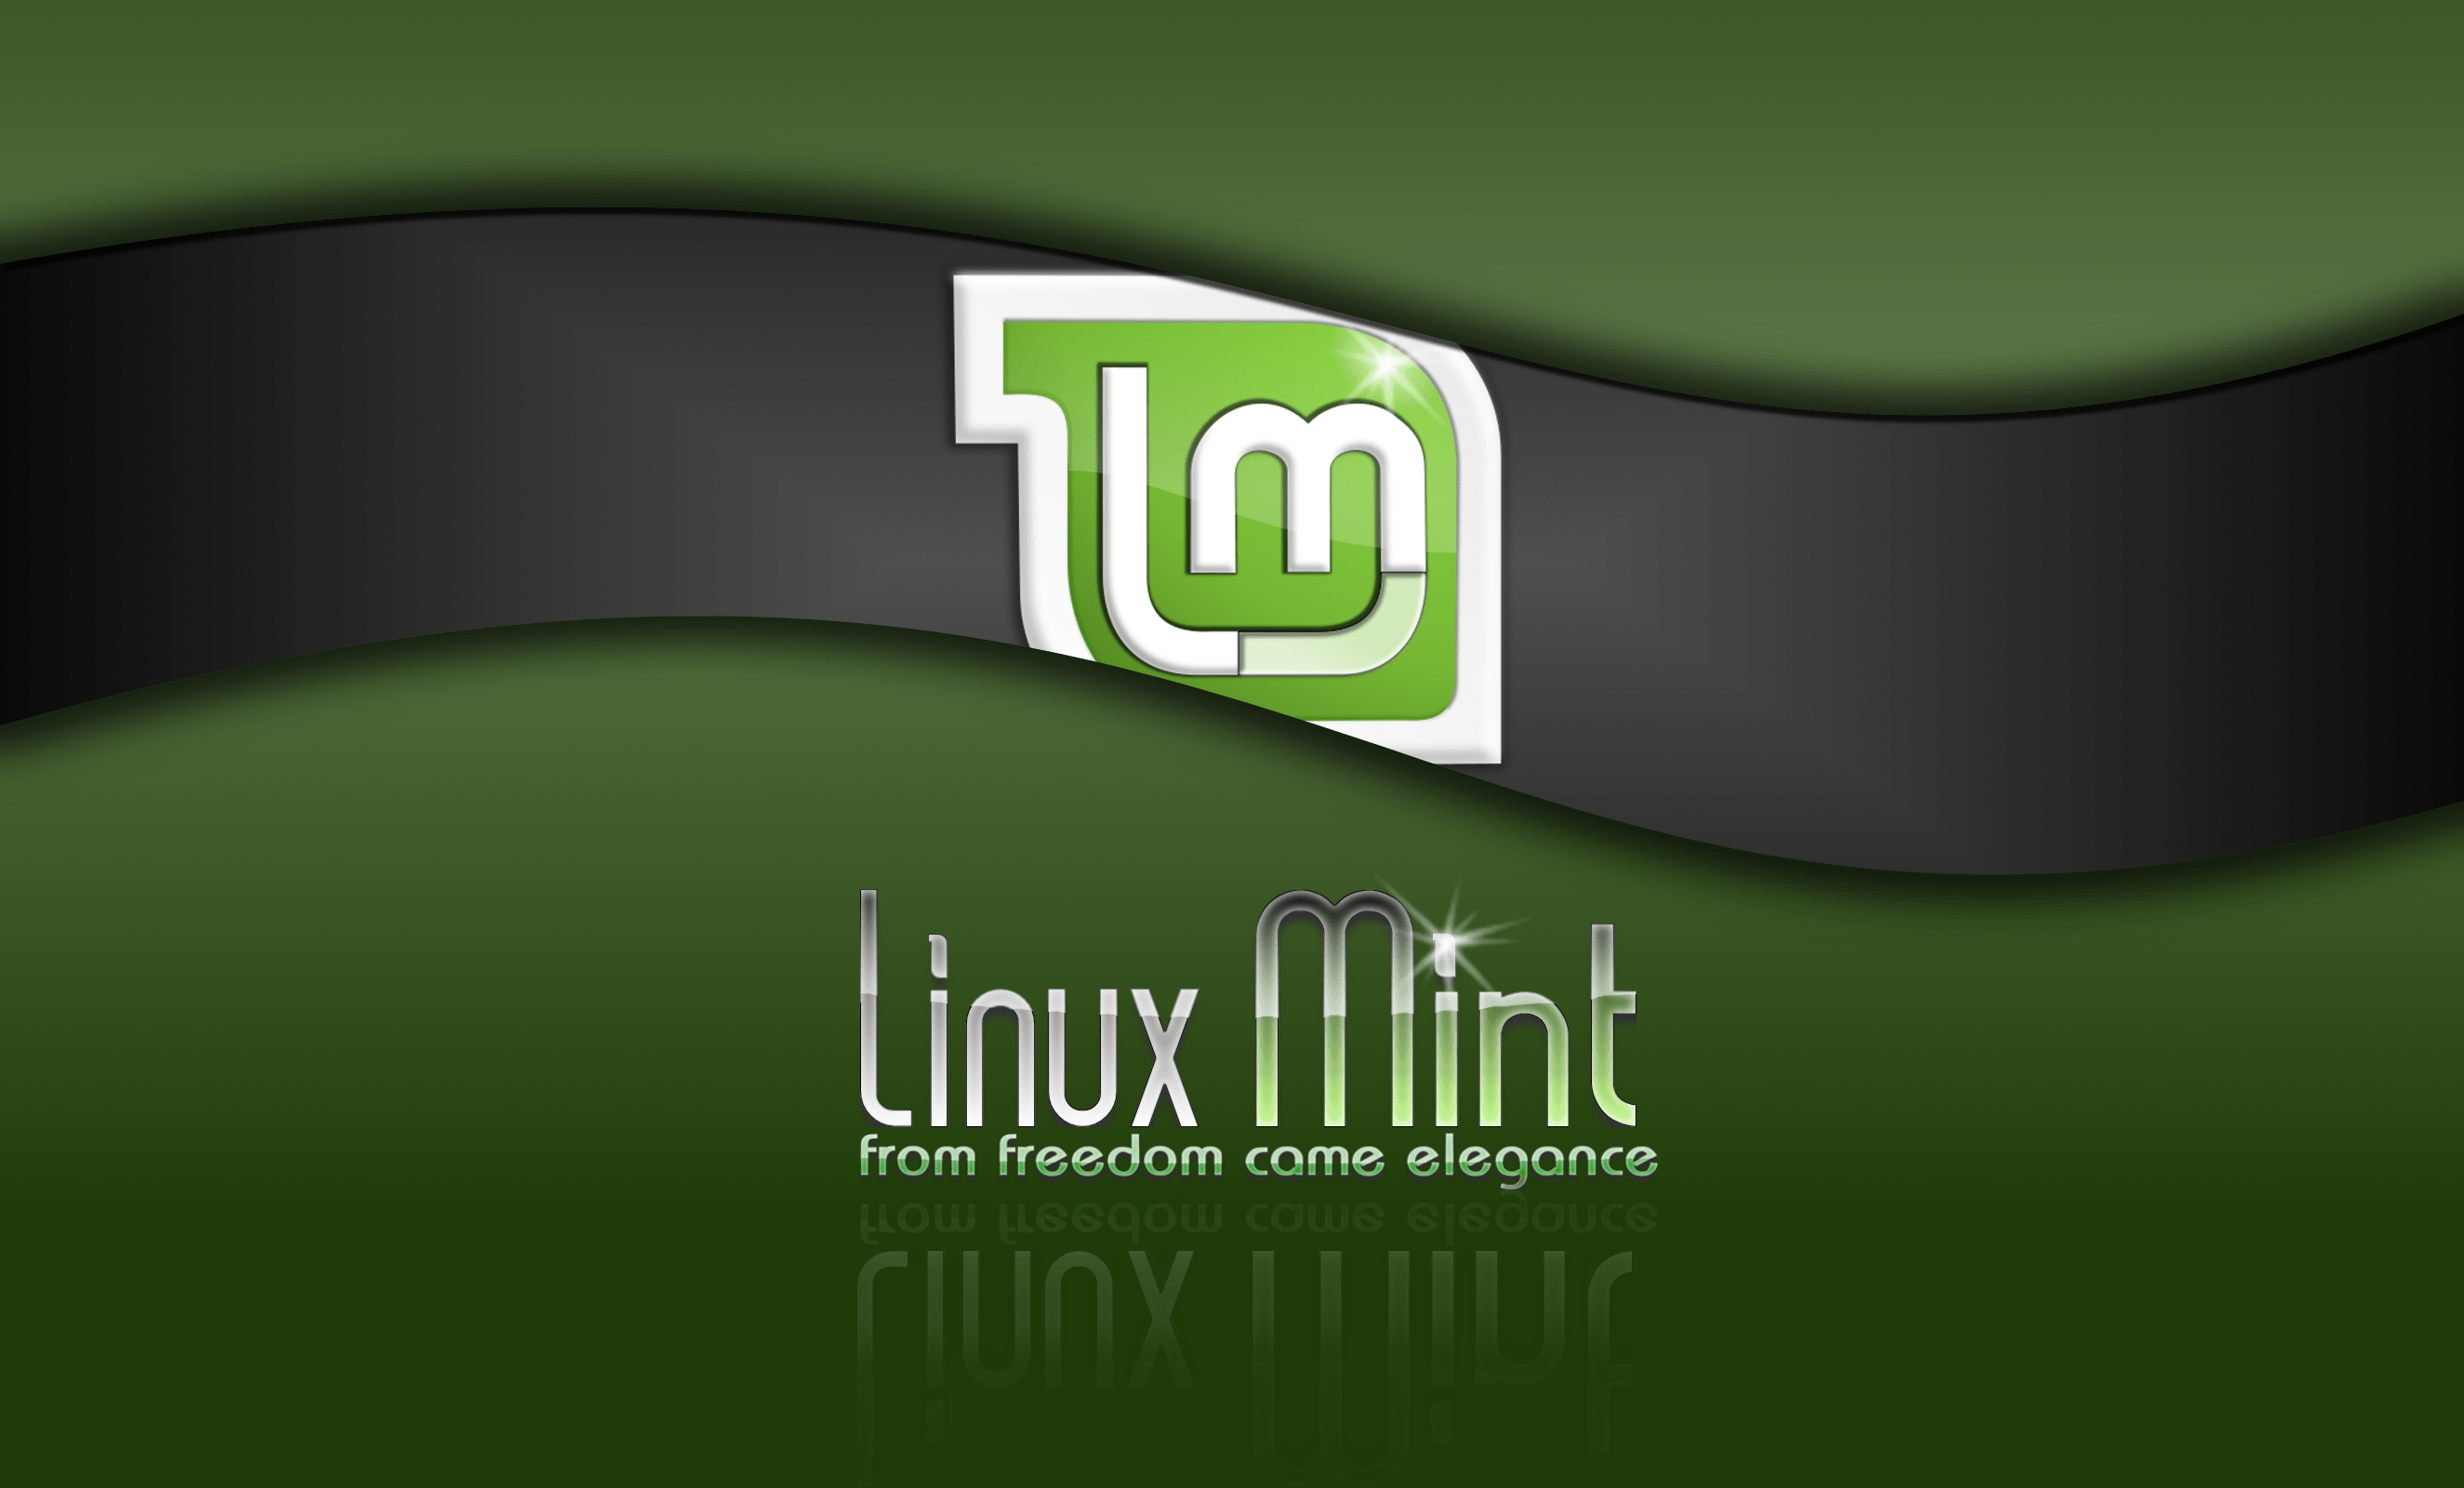 Fondos de Linux Mint 2650x1600 px, # 7321Y32 - 4USkY